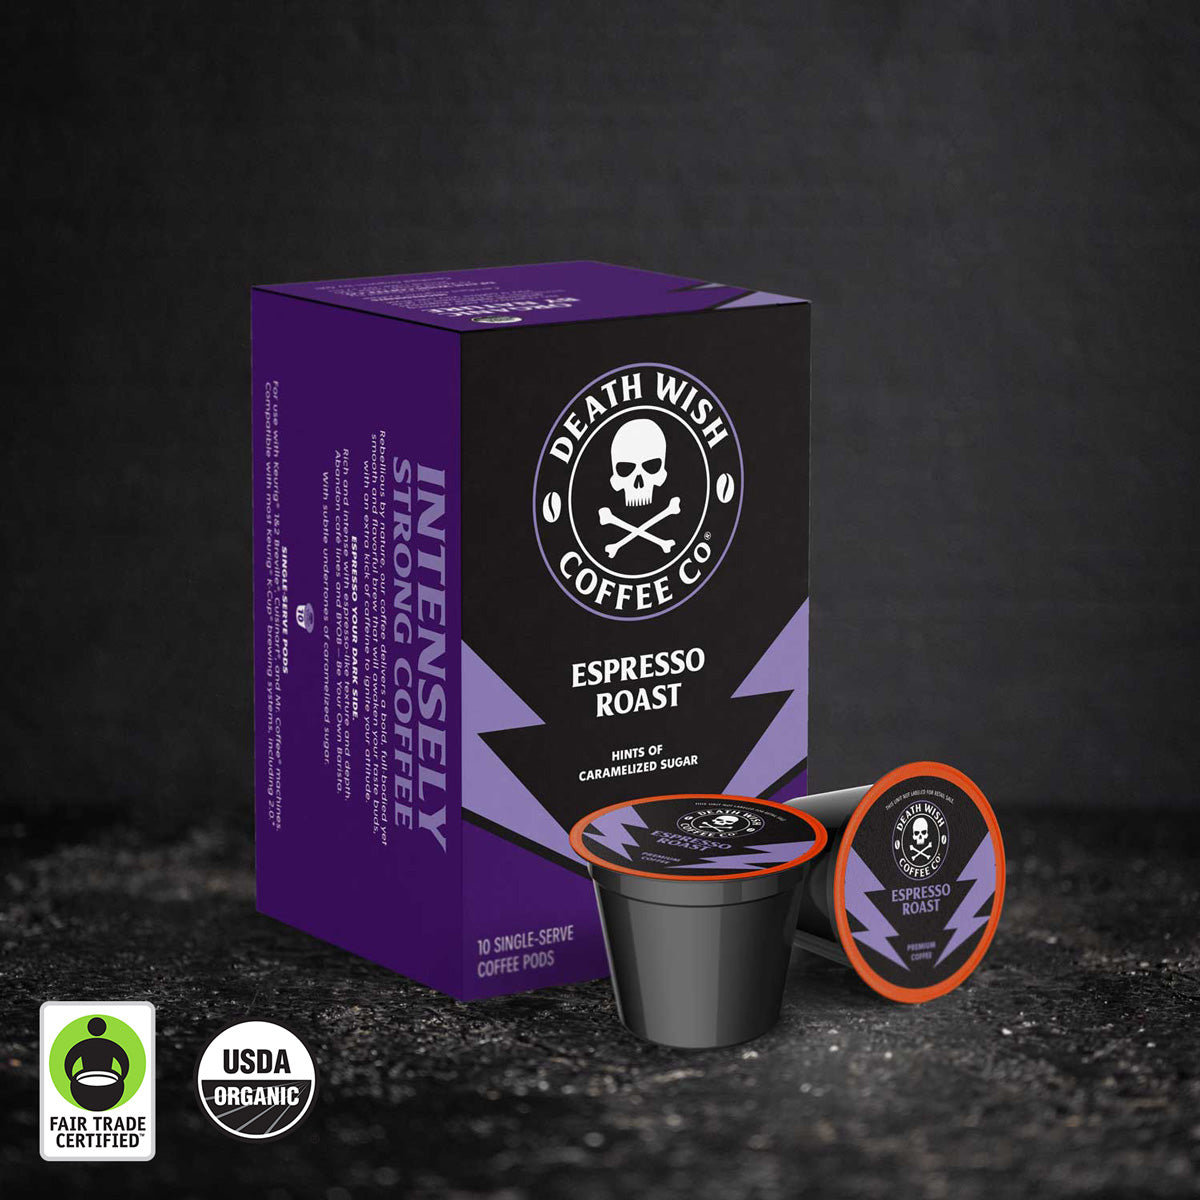 Death Wish Coffee Medium Roast Single-Serve Coffee Pods